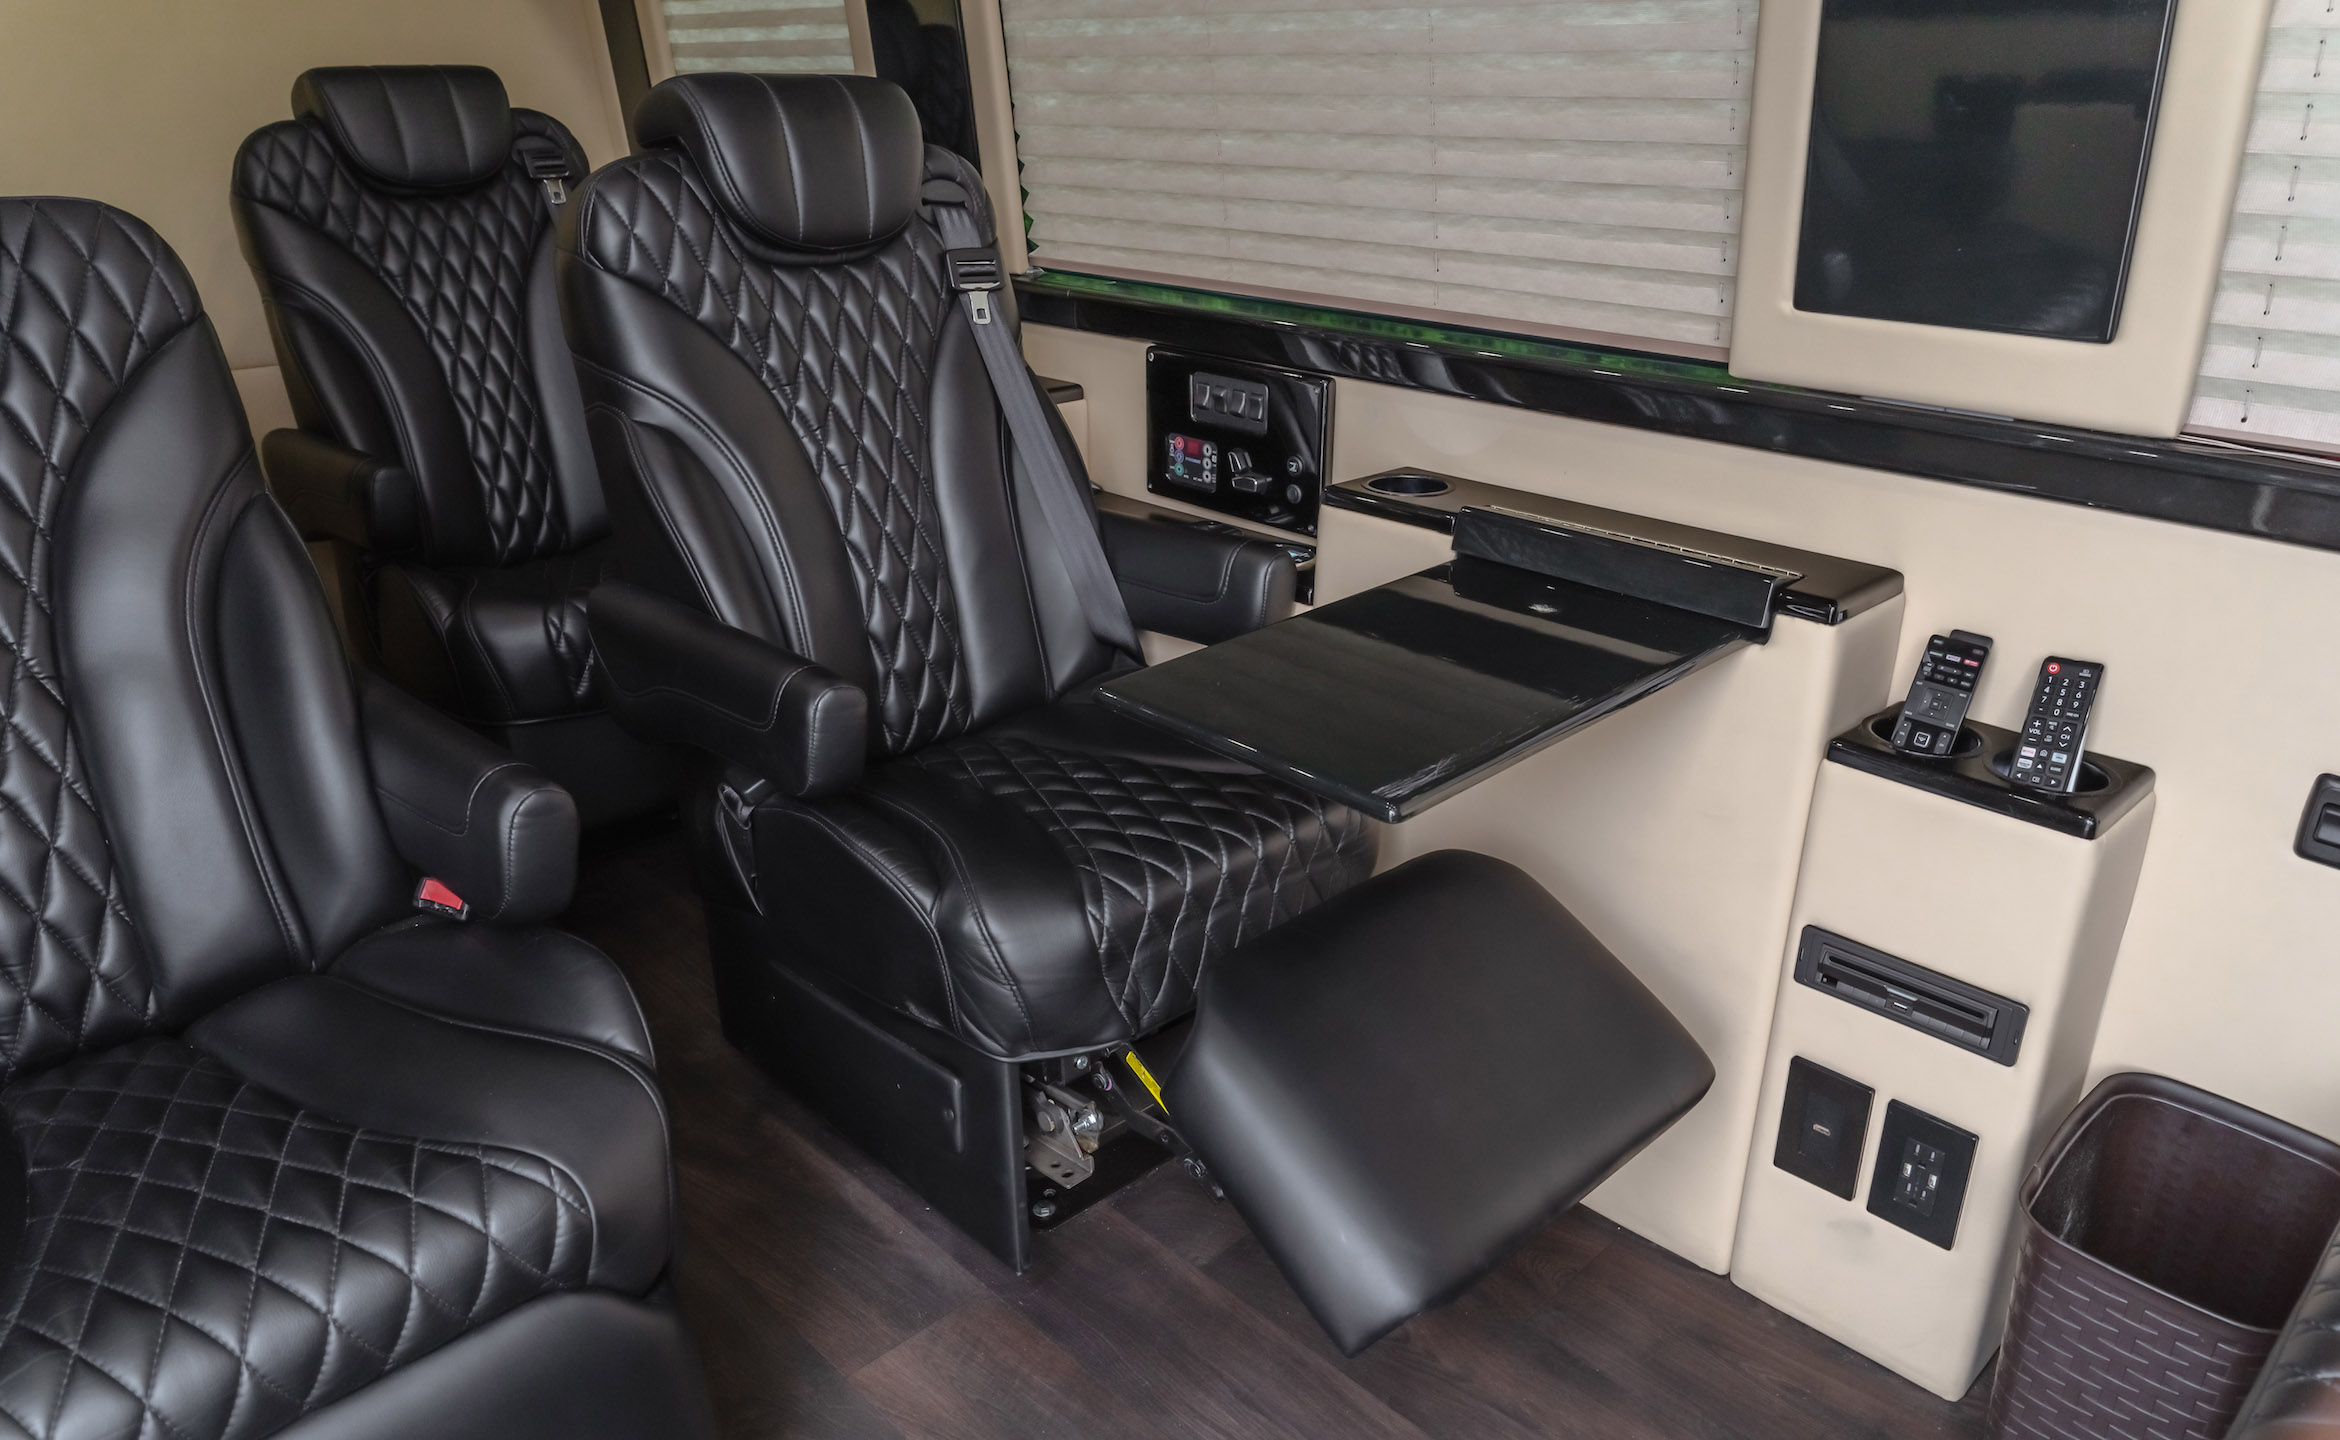 TI1 Luxury Trade In Sprinter Coach